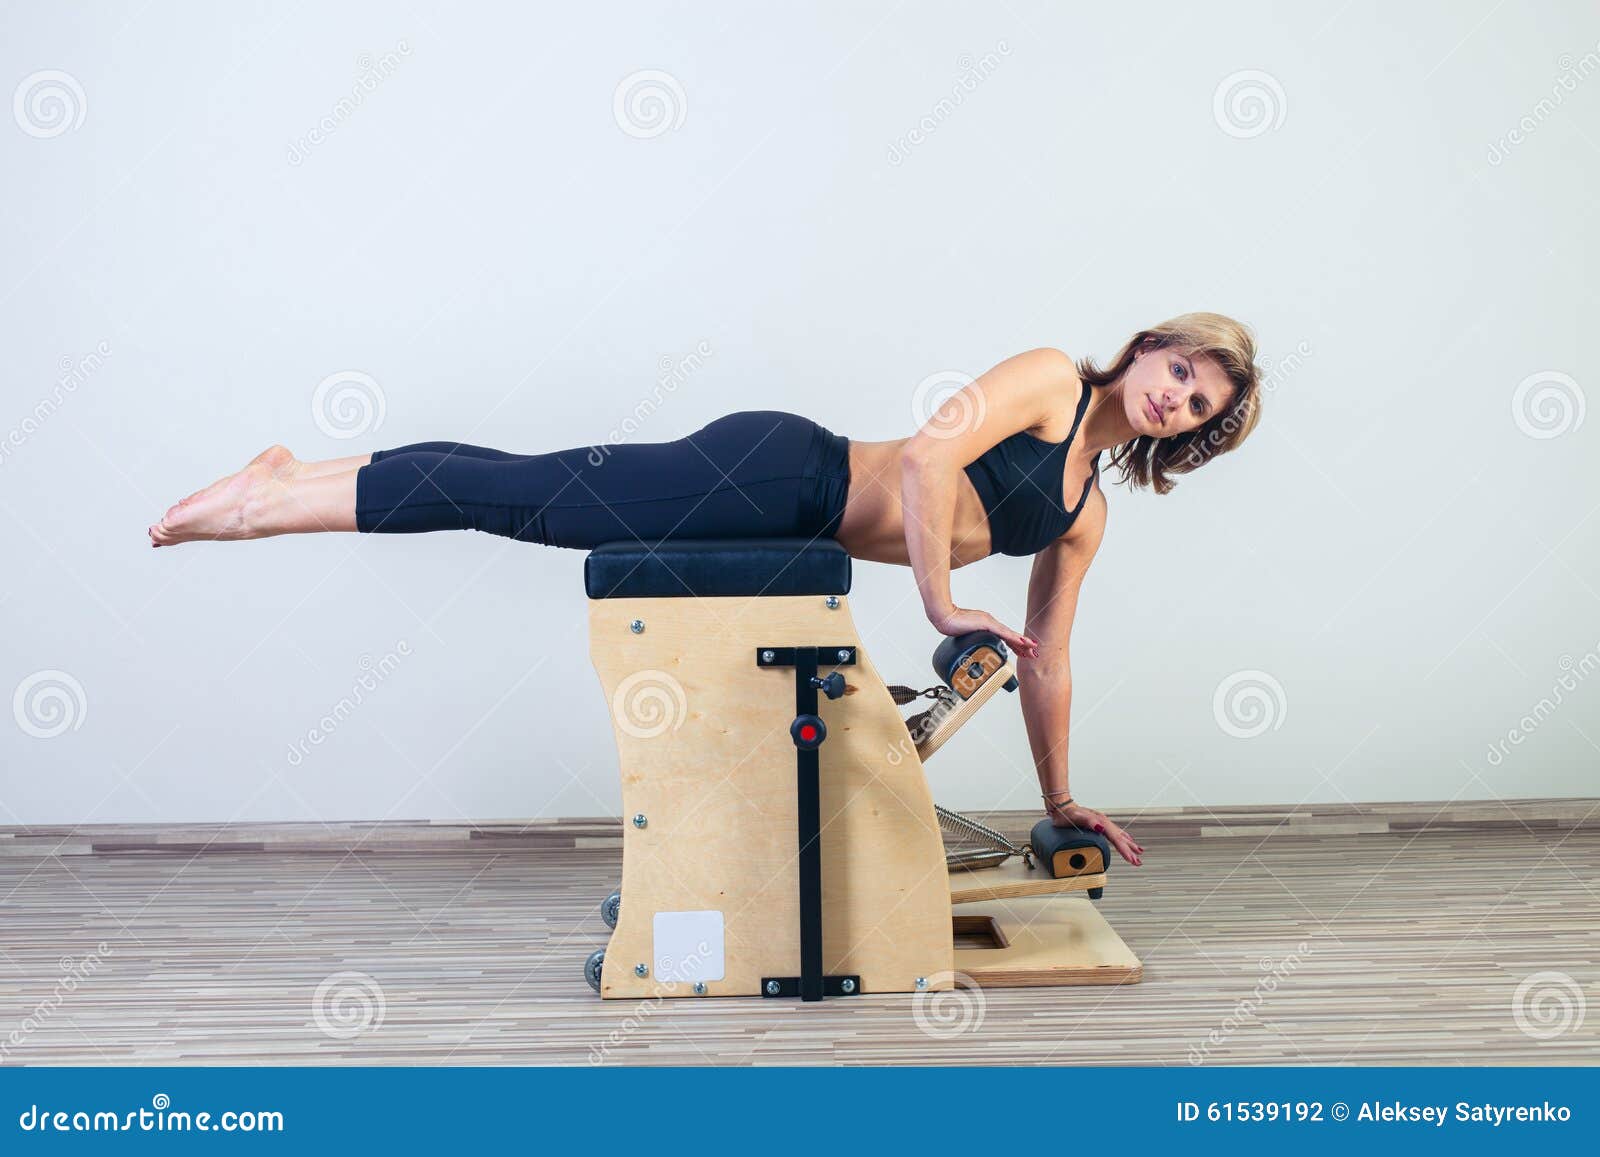 Combo Wunda Pilates Chair Woman Fitness Yoga Gym Stock Photo - Image of ...